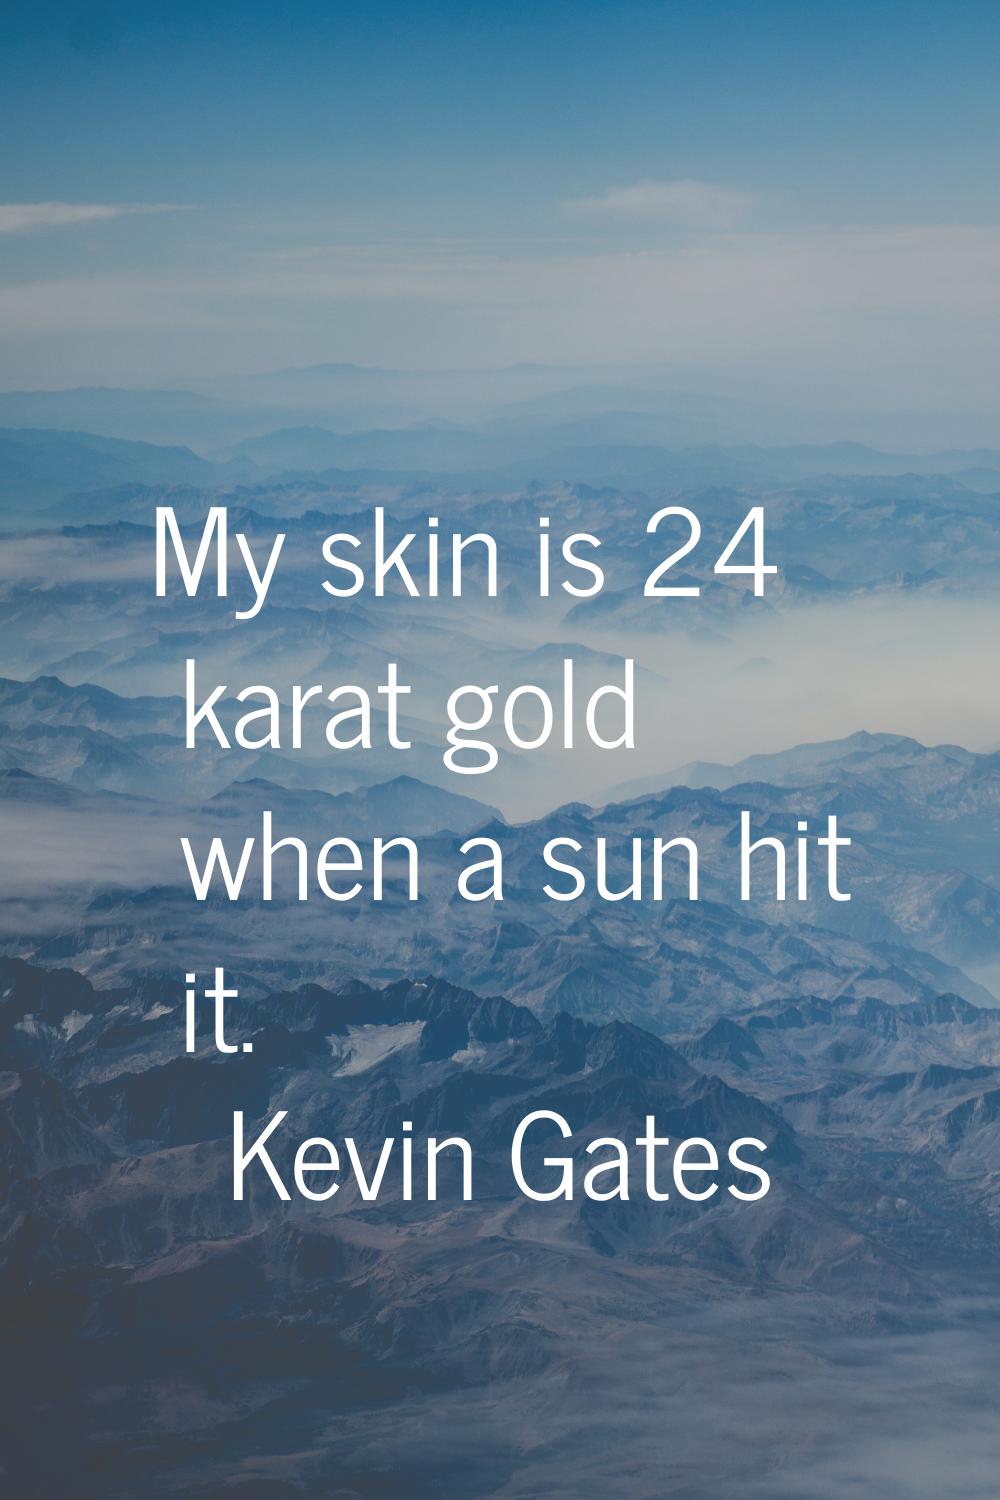 My skin is 24 karat gold when a sun hit it.